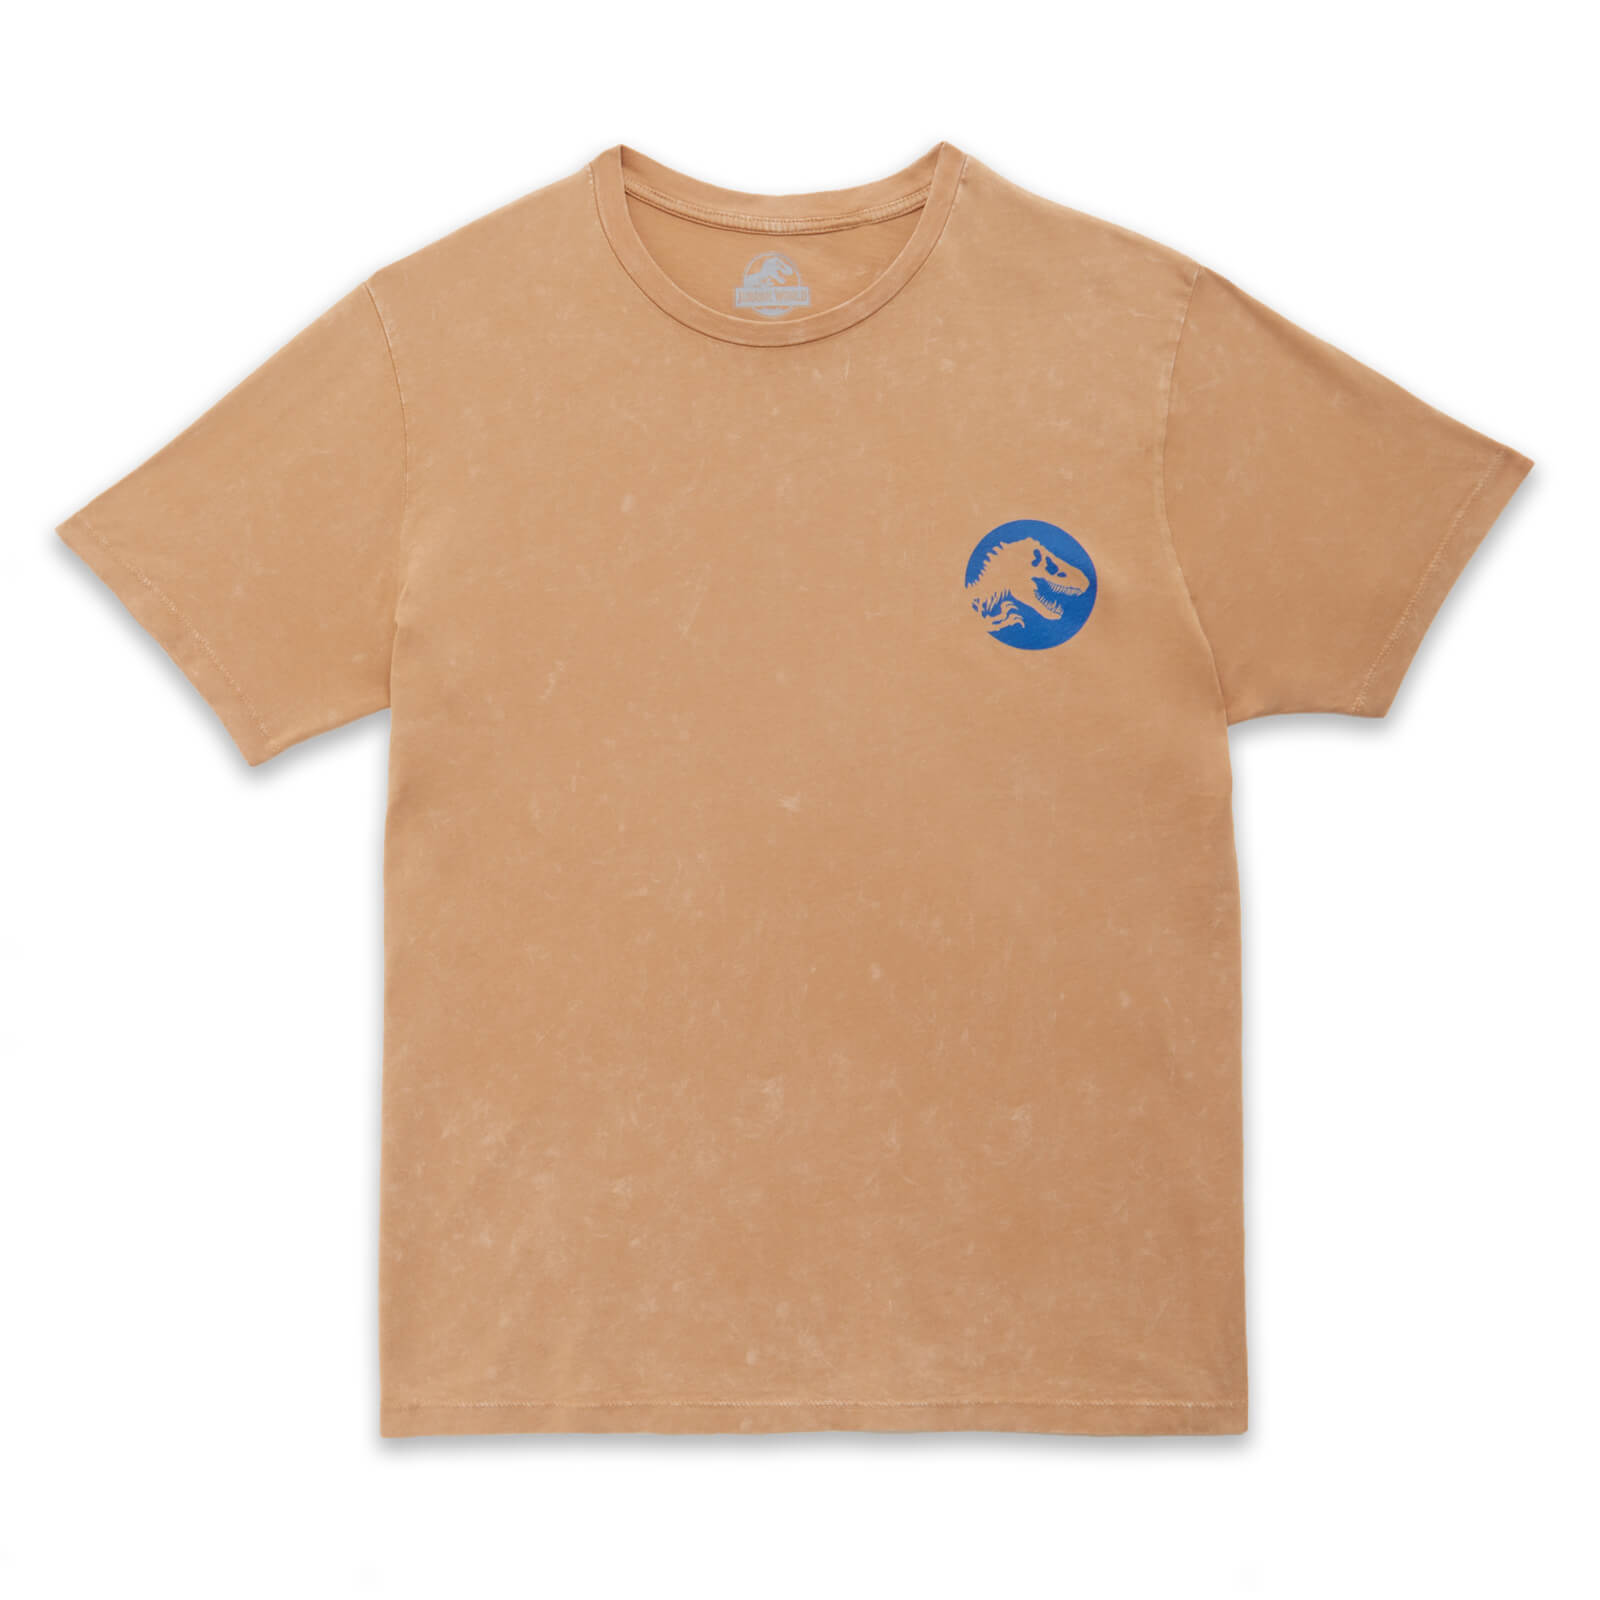 Jurassic Park Dinosaur Icon Unisex T-Shirt - Tan Acid Wash - S - Tan Acid Wash